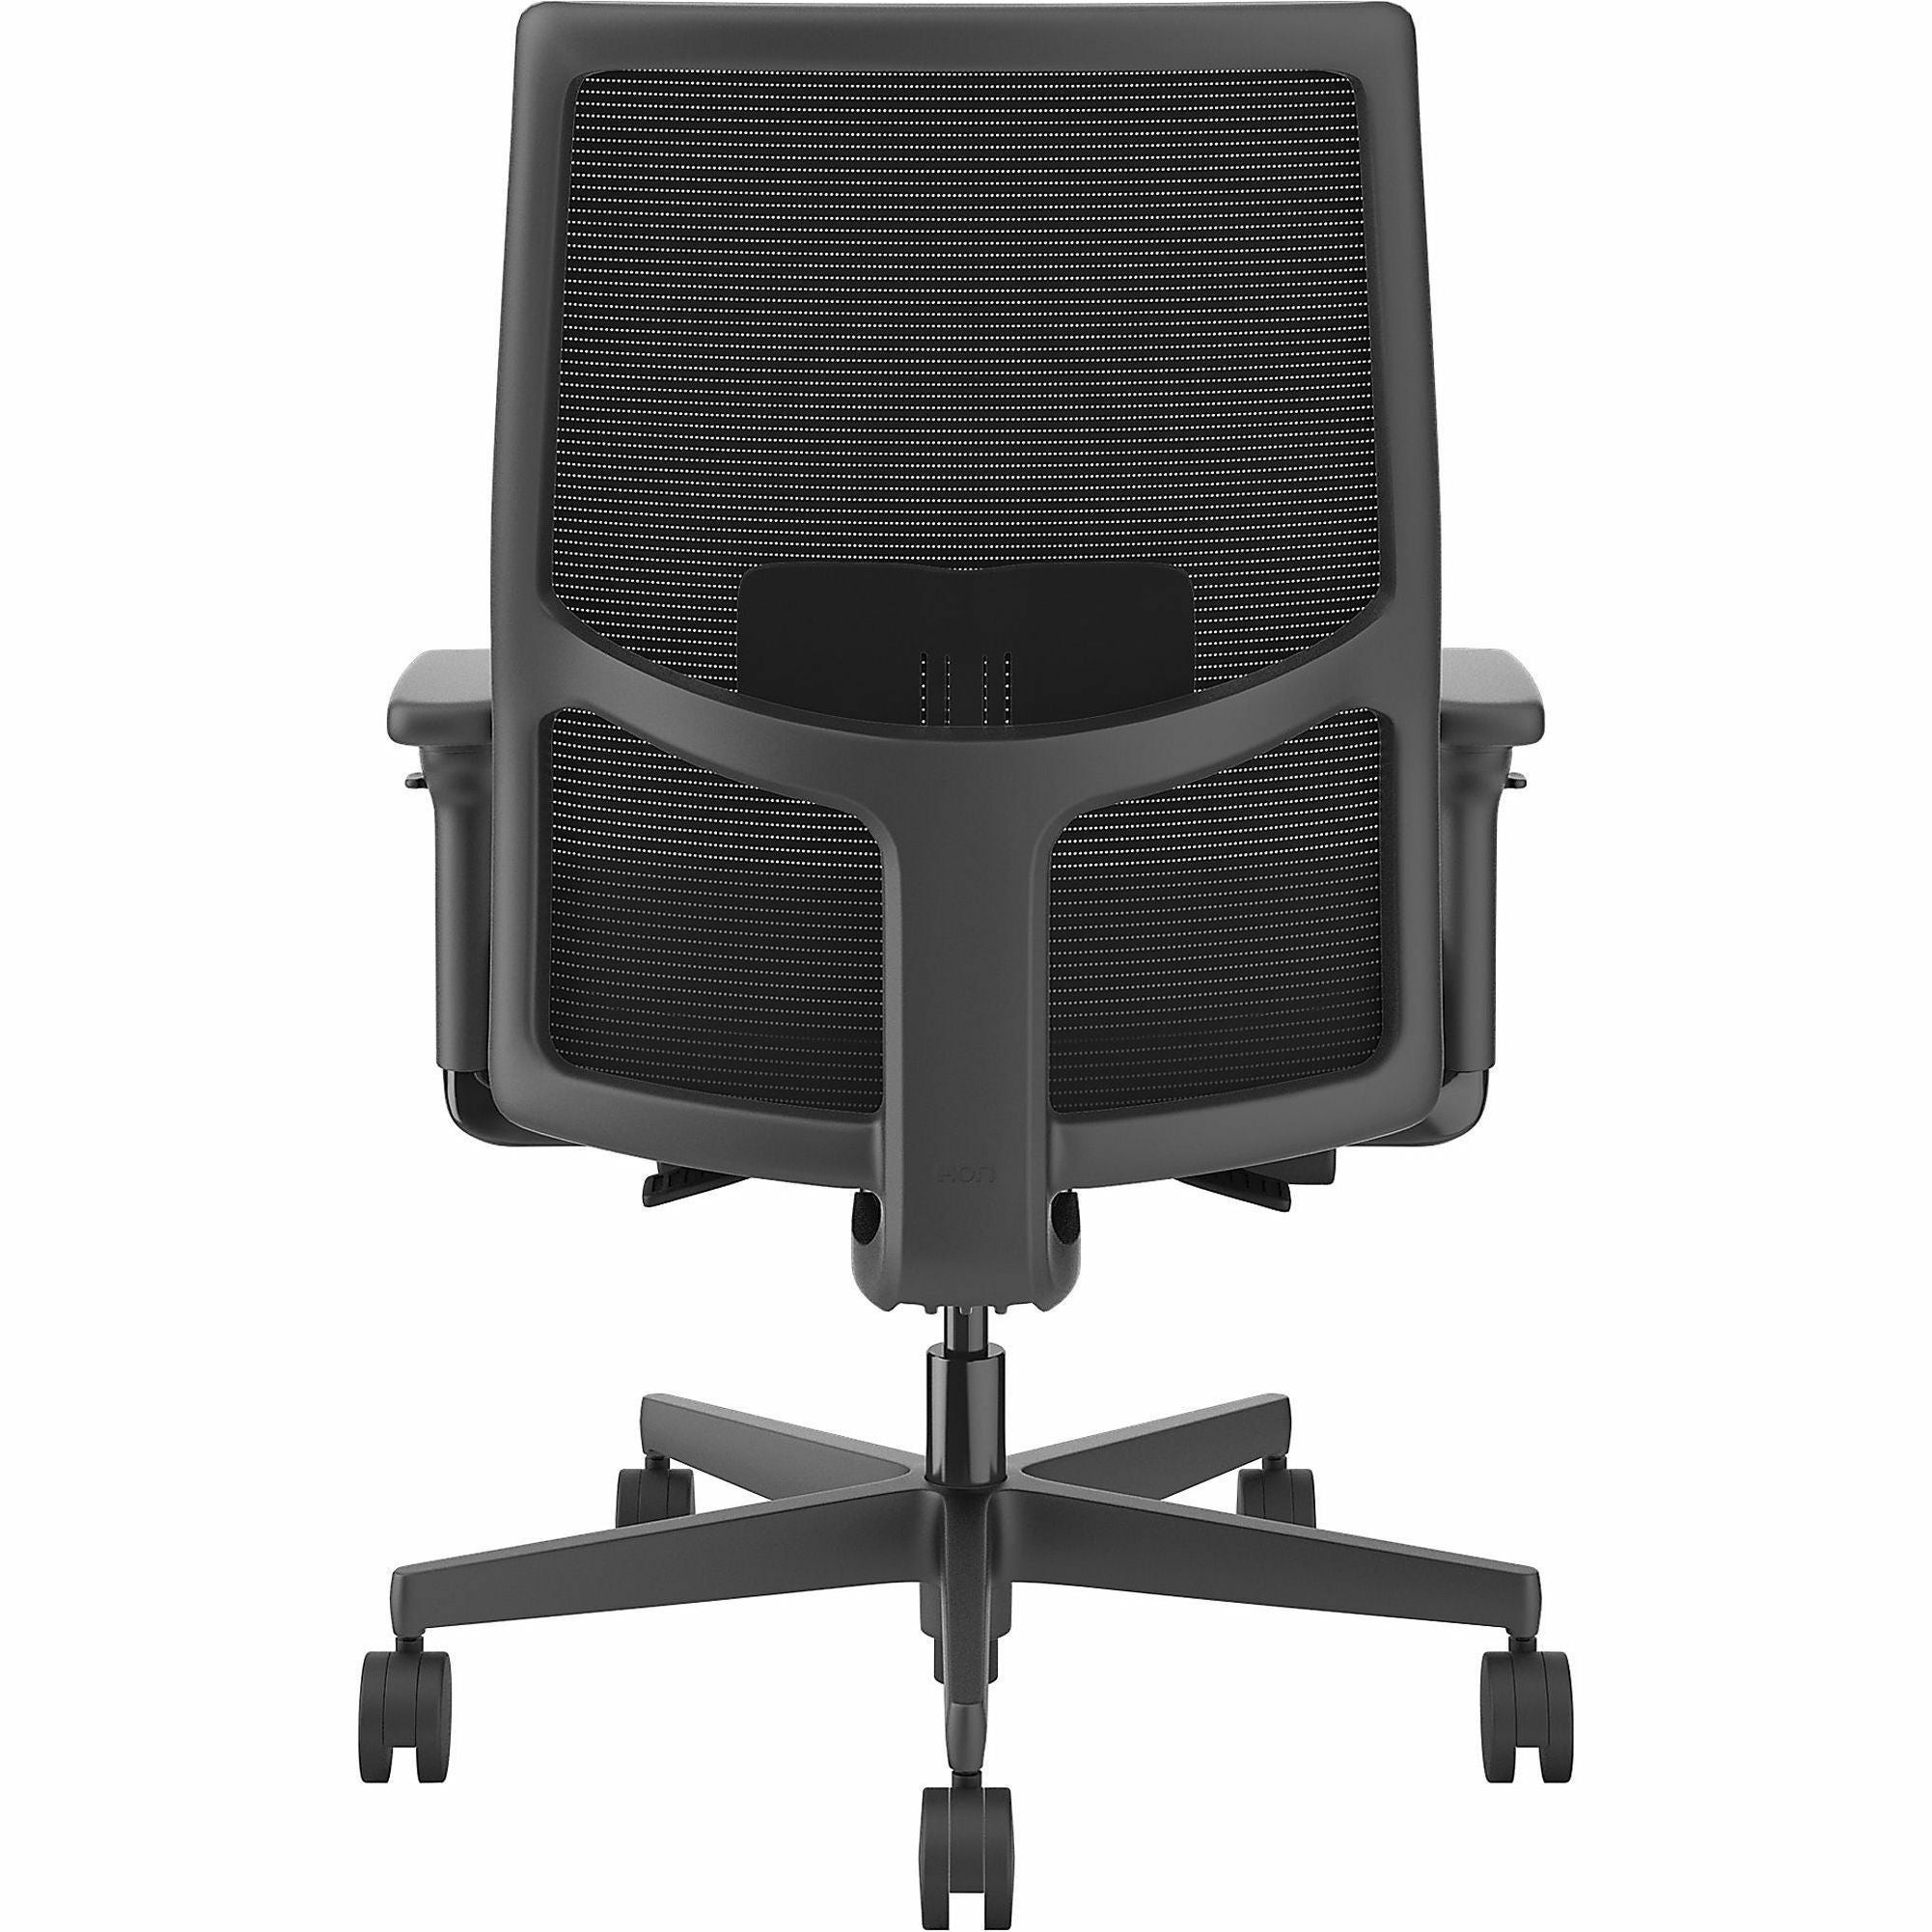 hon-ignition-20-mid-back-big-&-tall-task-chair-black-foam-seat-black-back-black-frame-mid-back-5-star-base-armrest-1-each_honi2btvmu10btn - 4